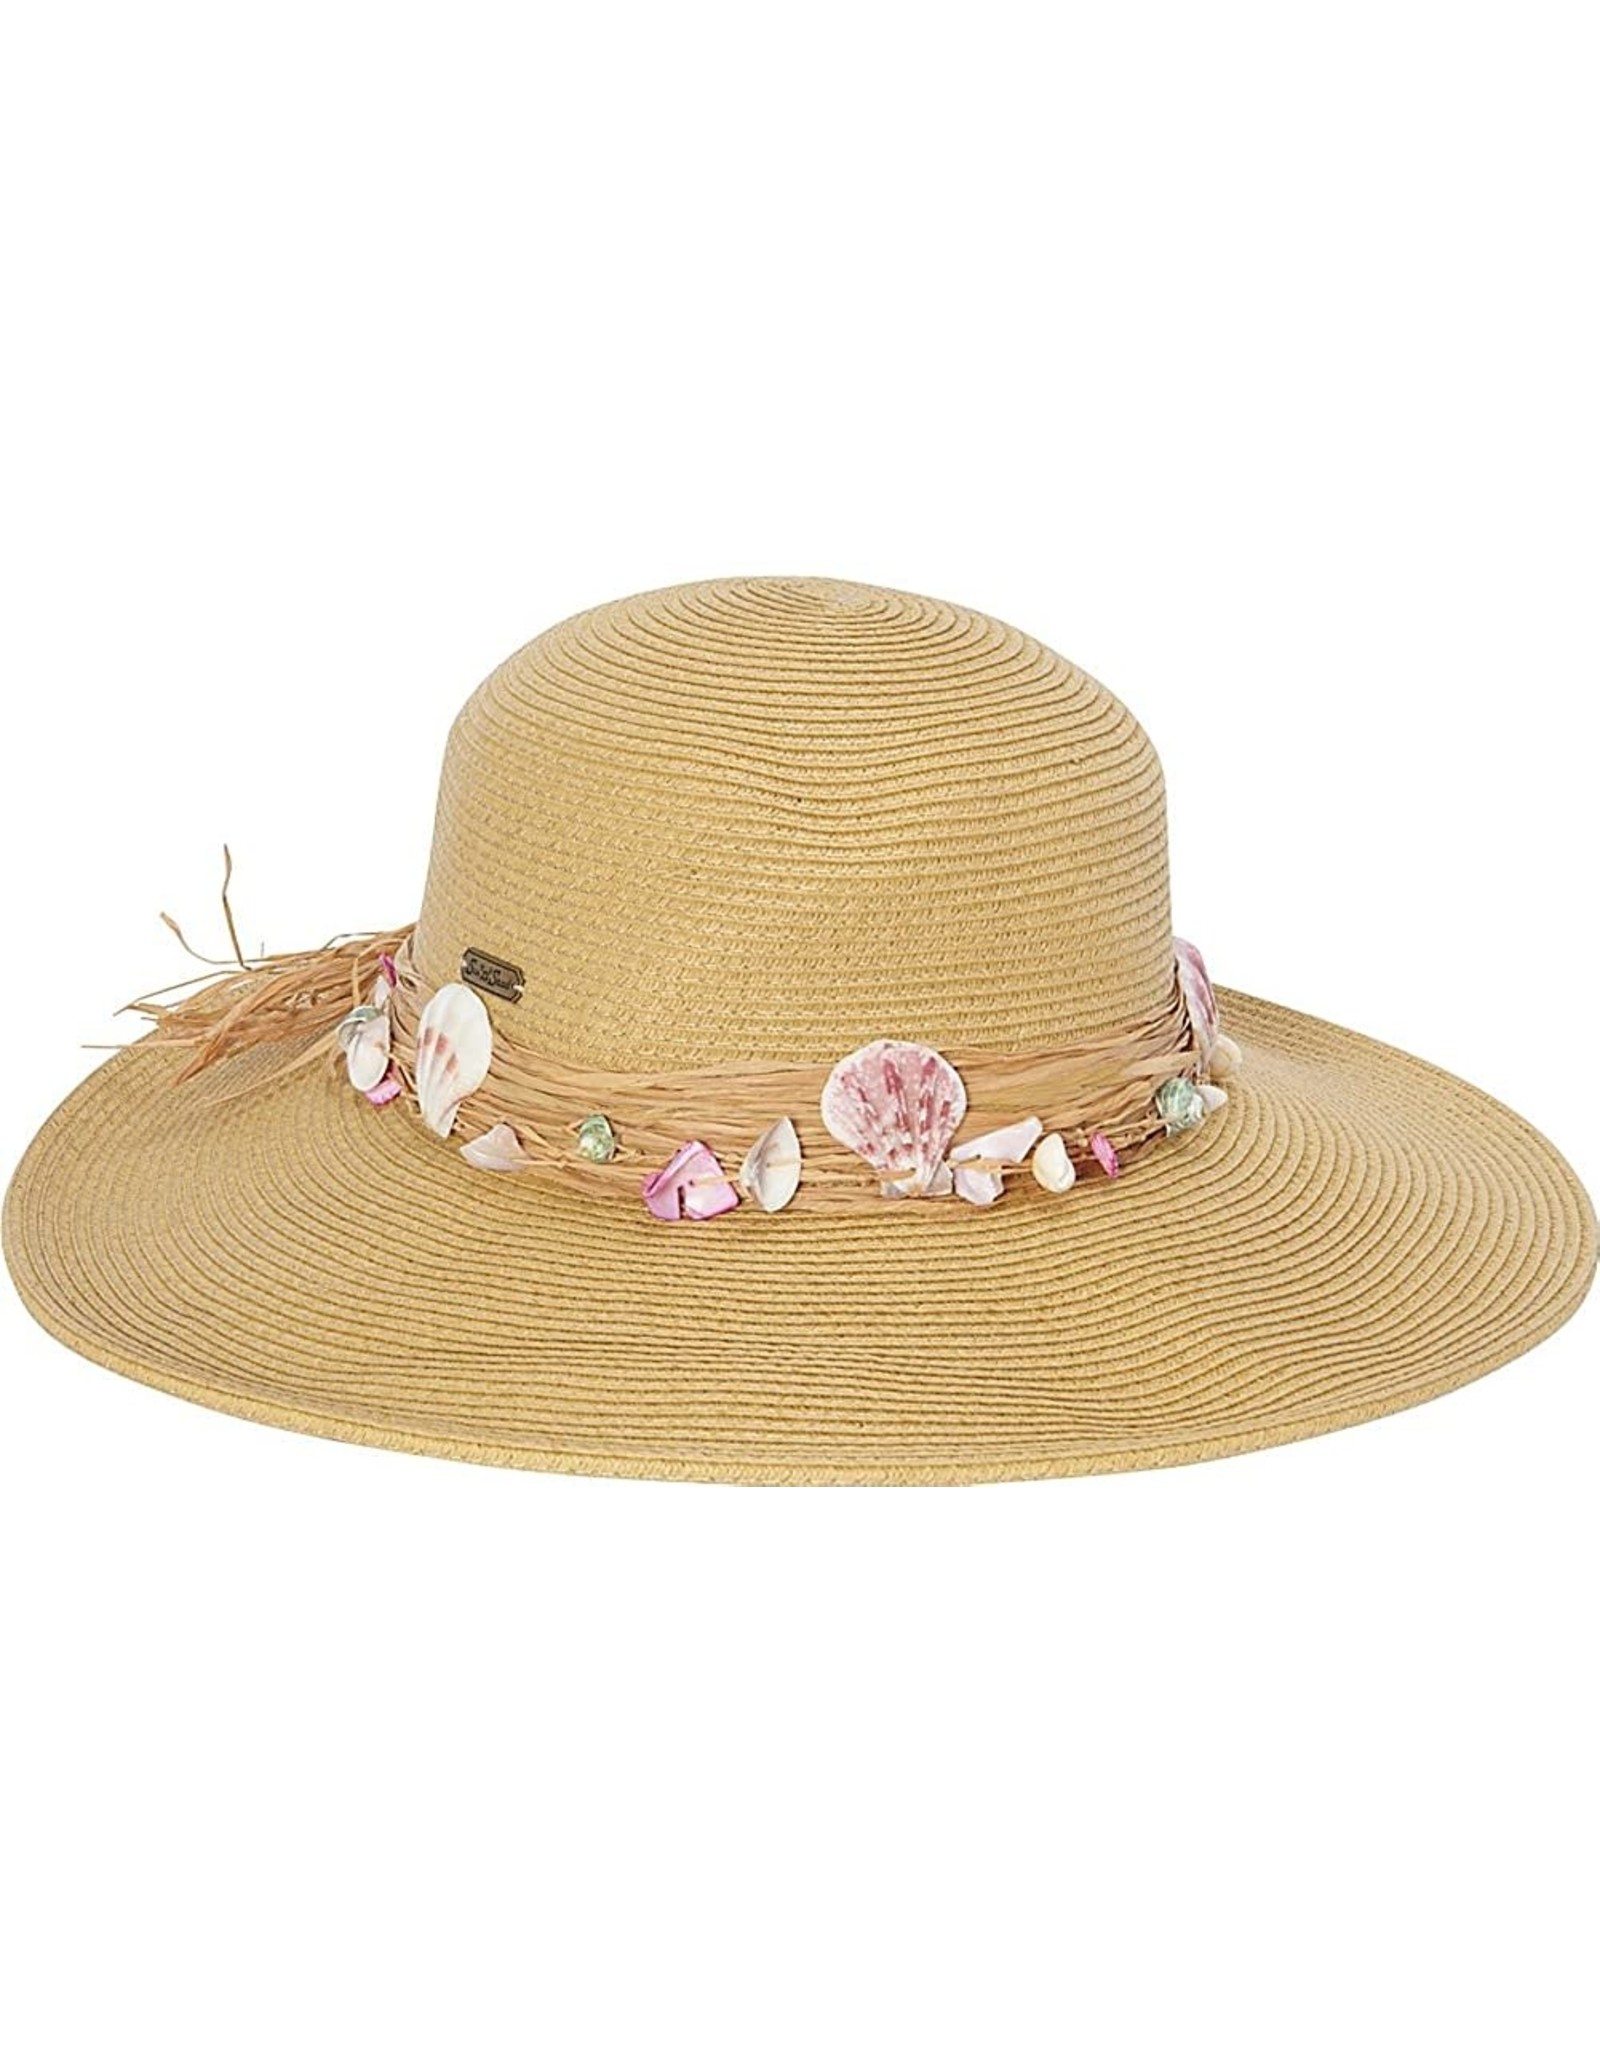 Sun N Sand Womens Hats Raffia With Seashells Hat - Natural